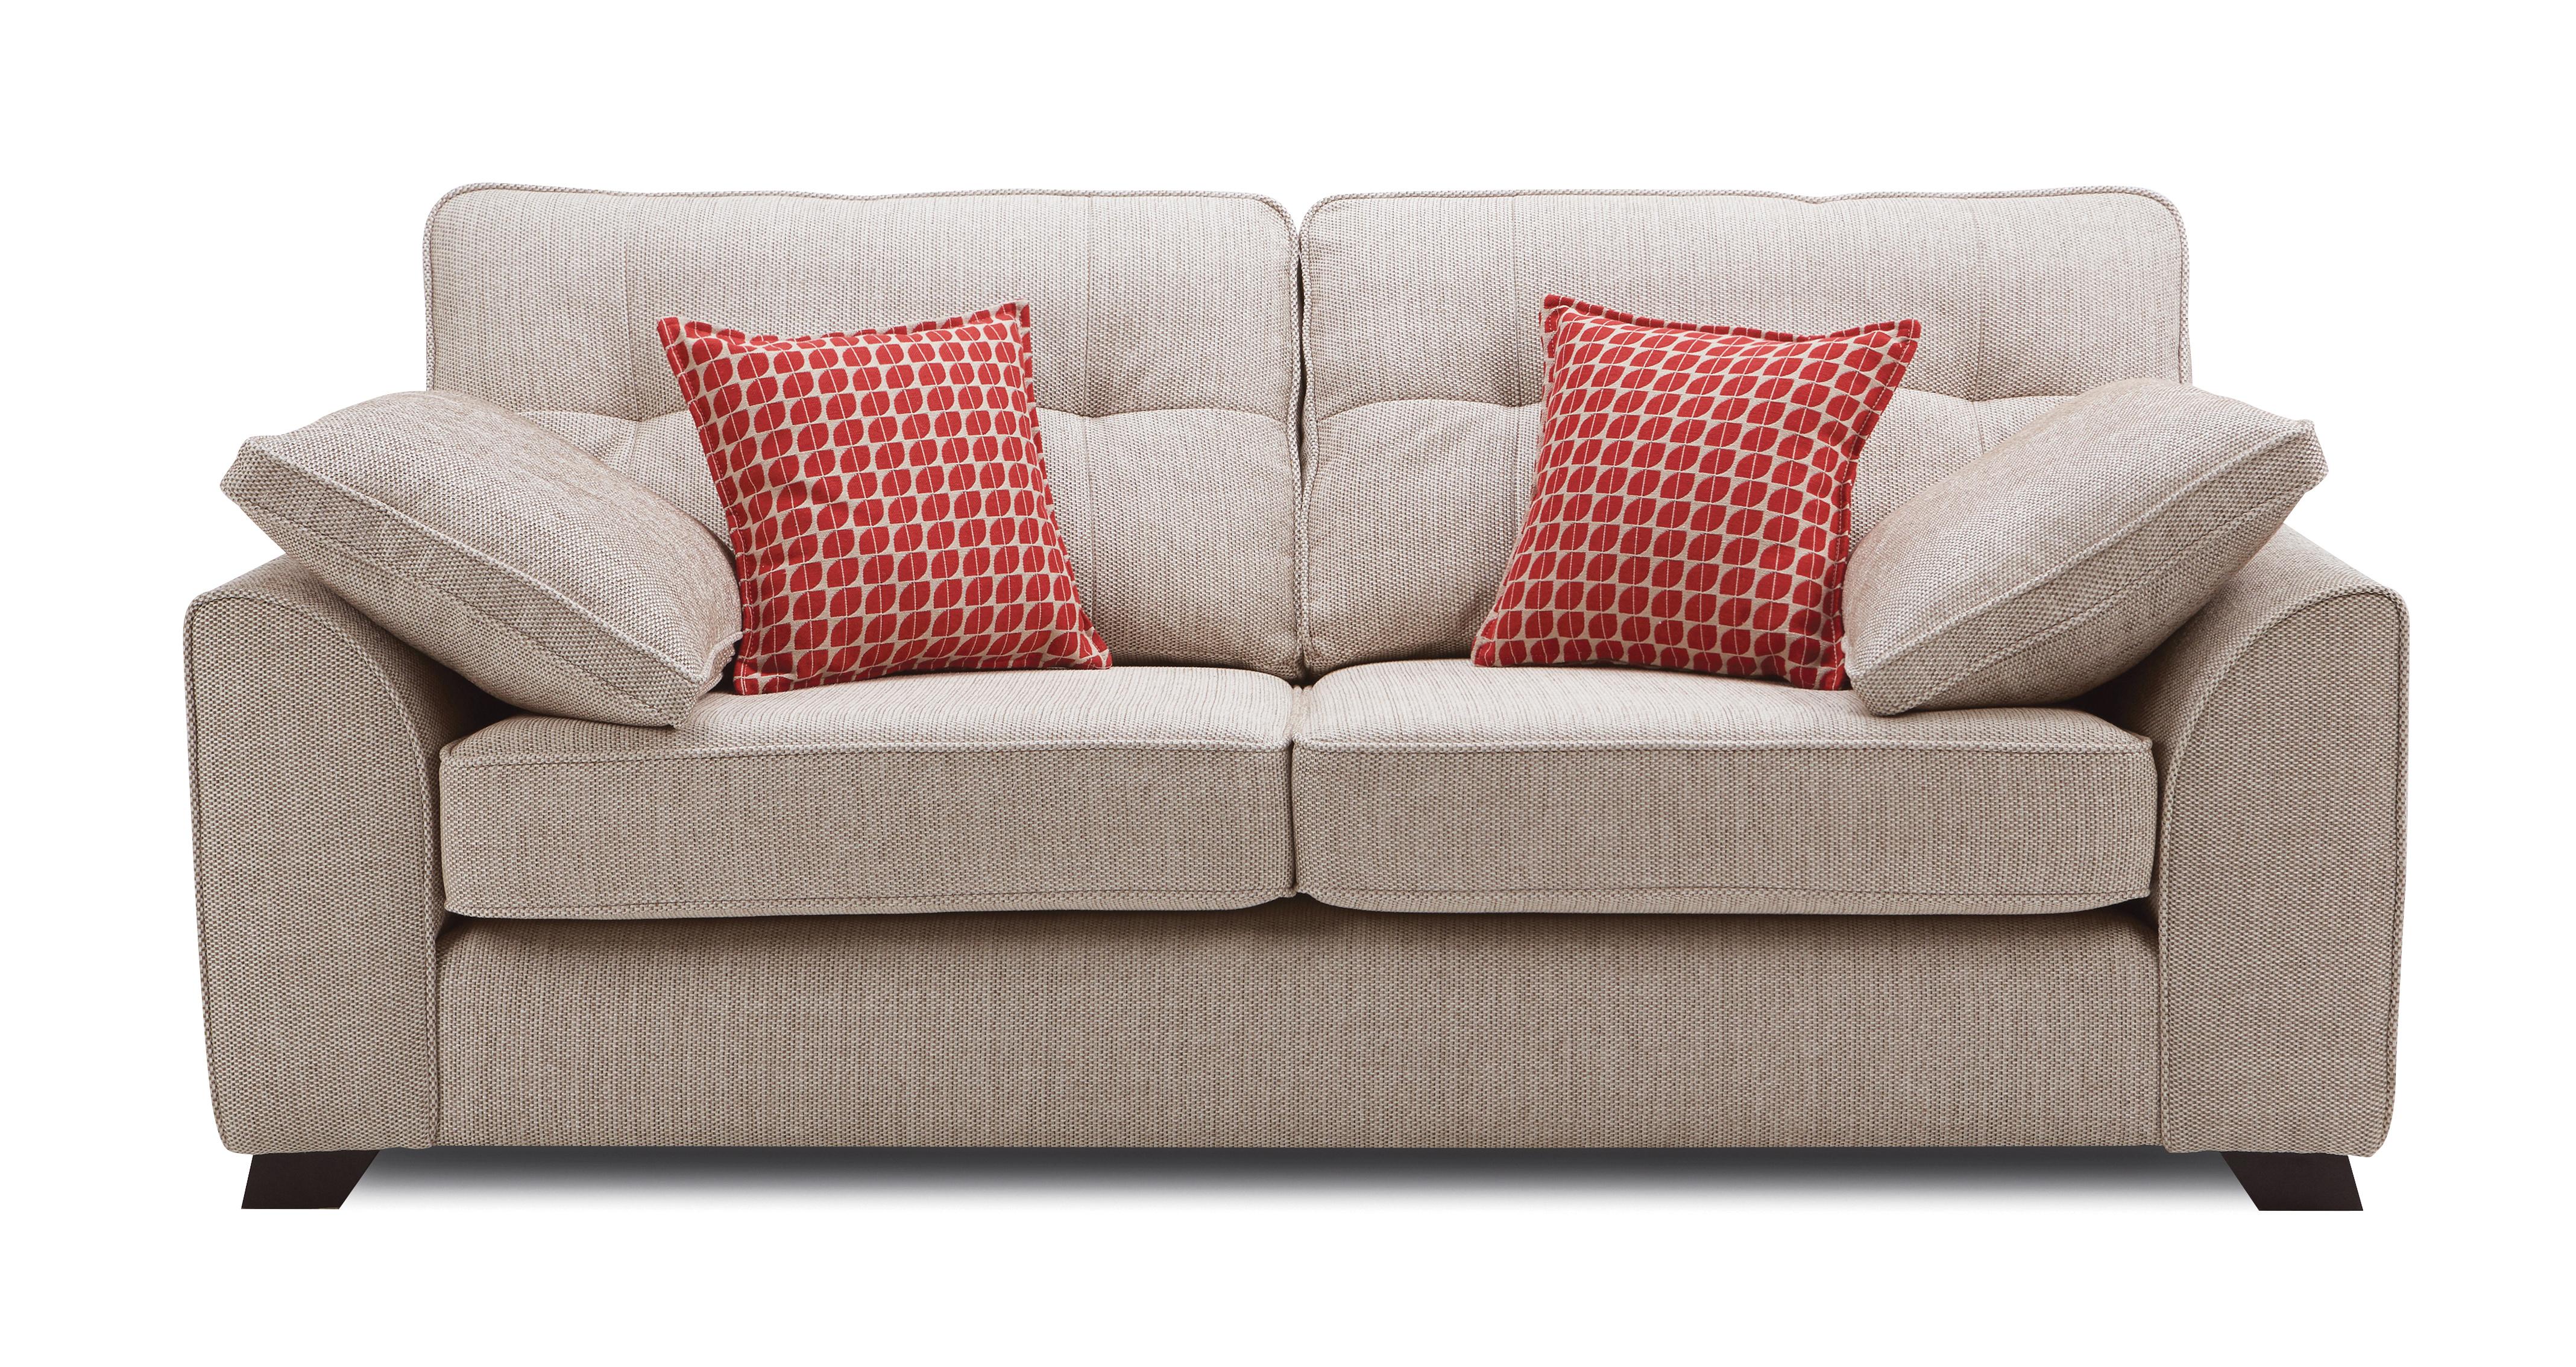 edmonton sofa bed clearance